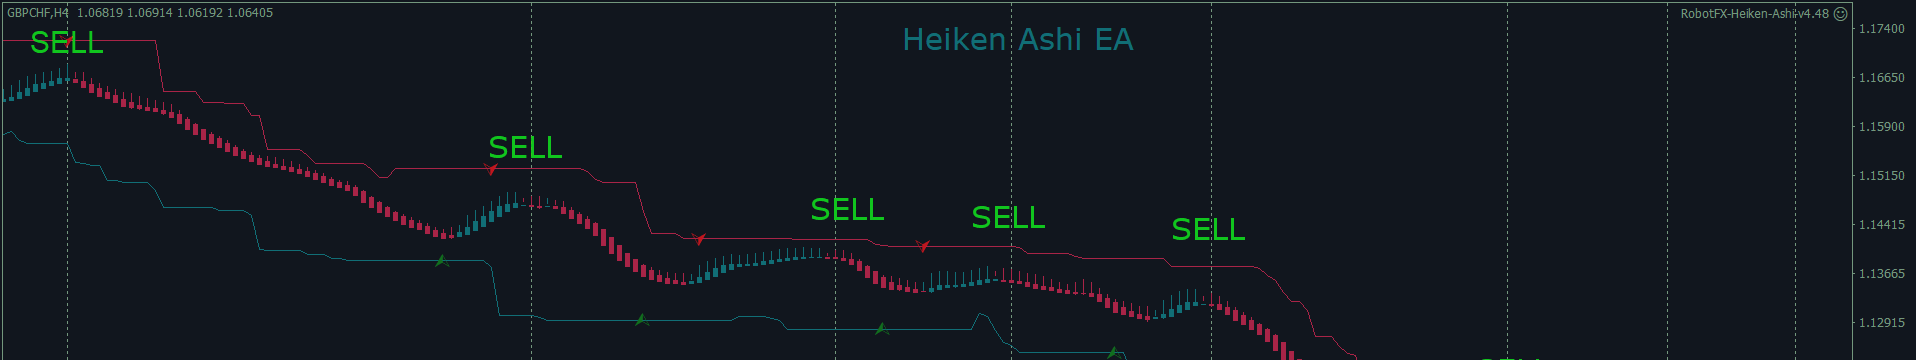 Trading Heiken Ashi automatically